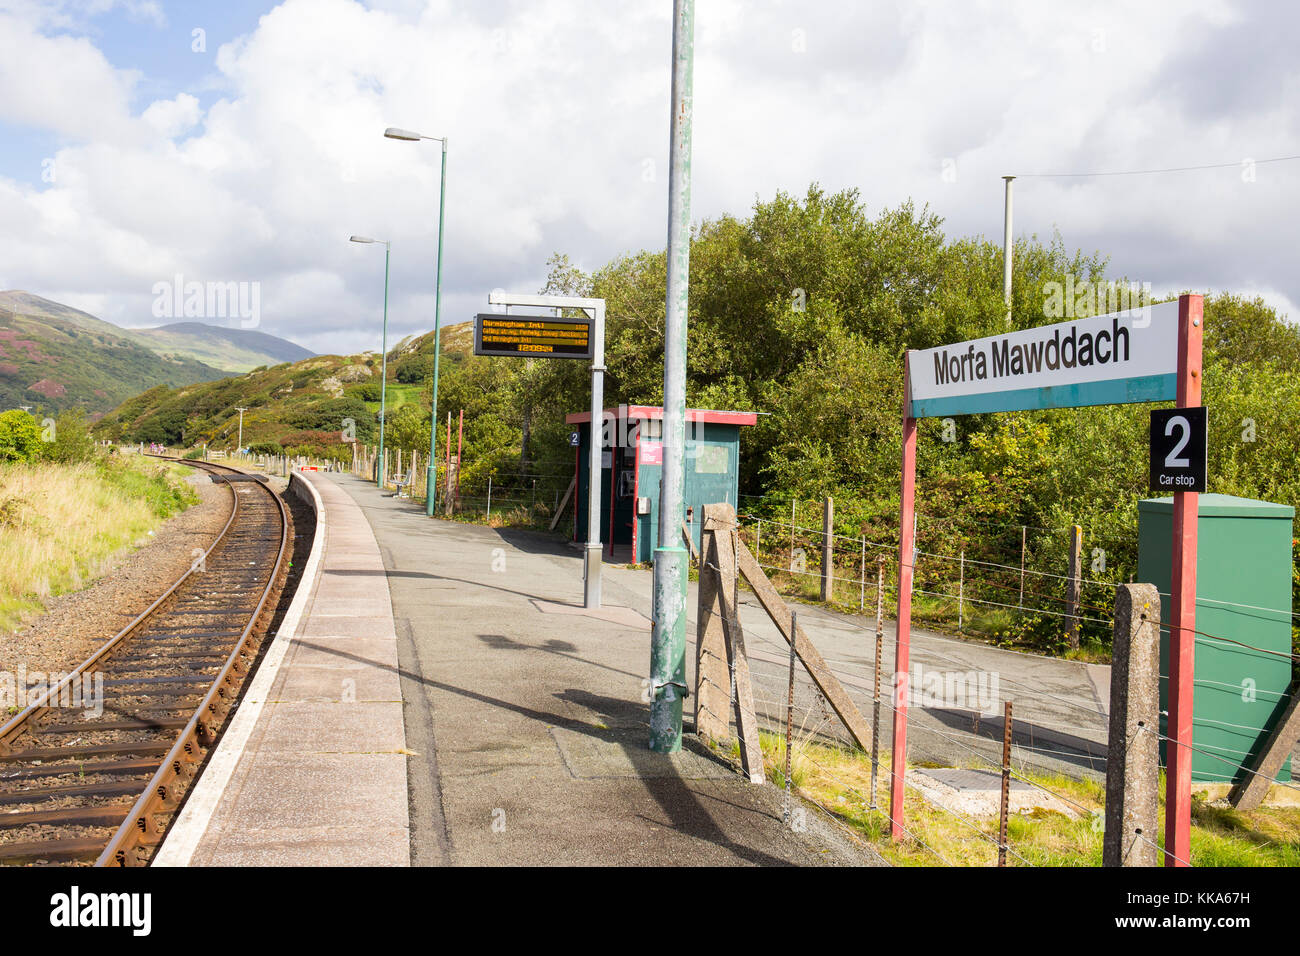 Morfa Mawddach Anfrage Haltestelle Bahnhof auf der Cambrian Coast Railway, Gwynedd North Wales Großbritannien Stockfoto